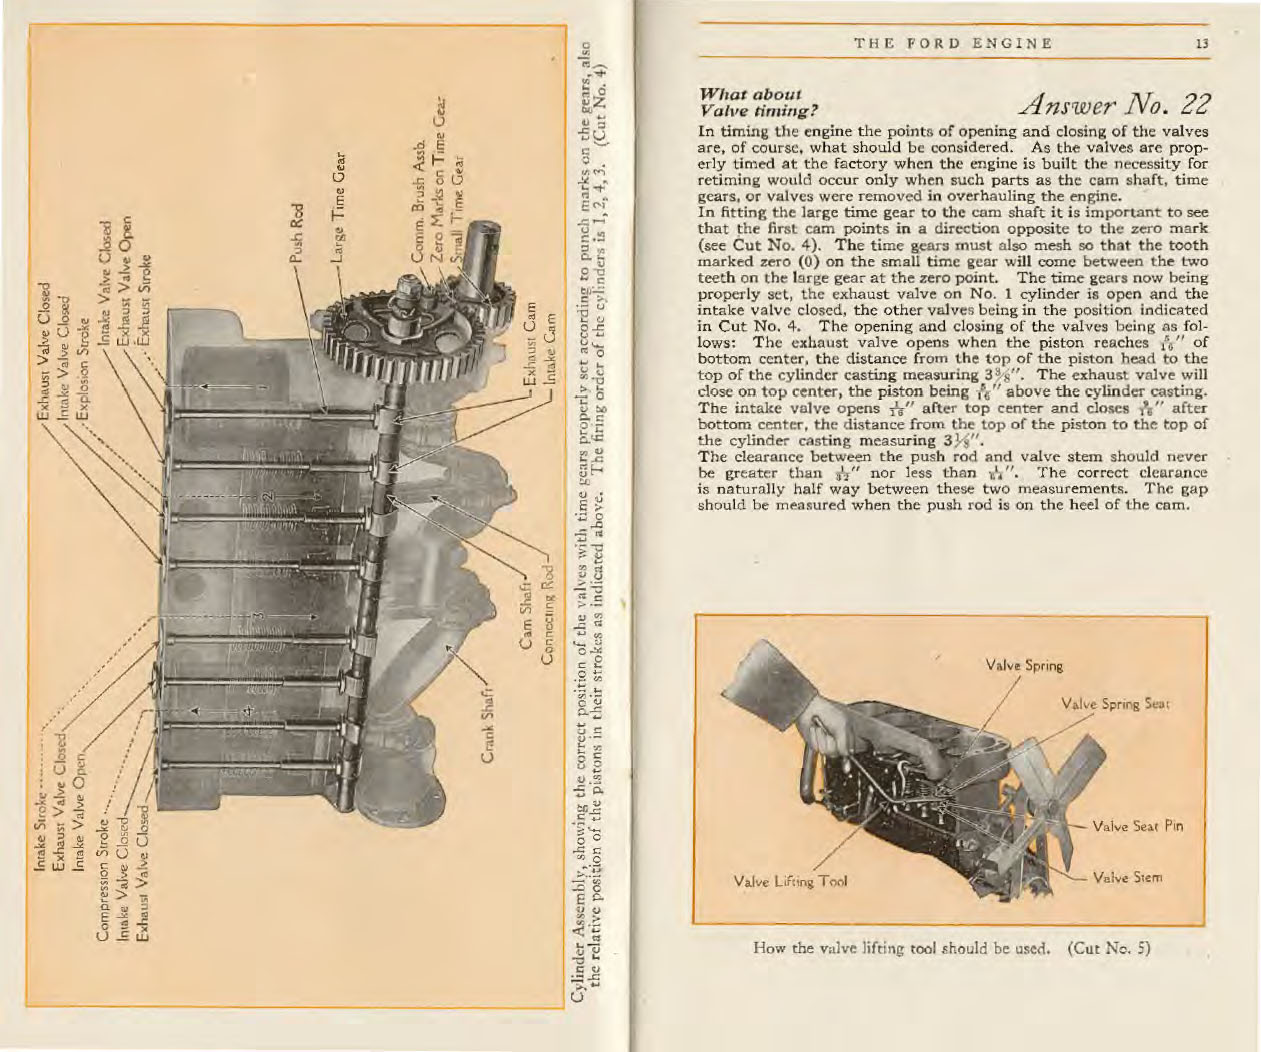 n_1919 Ford Manual-12-13.jpg